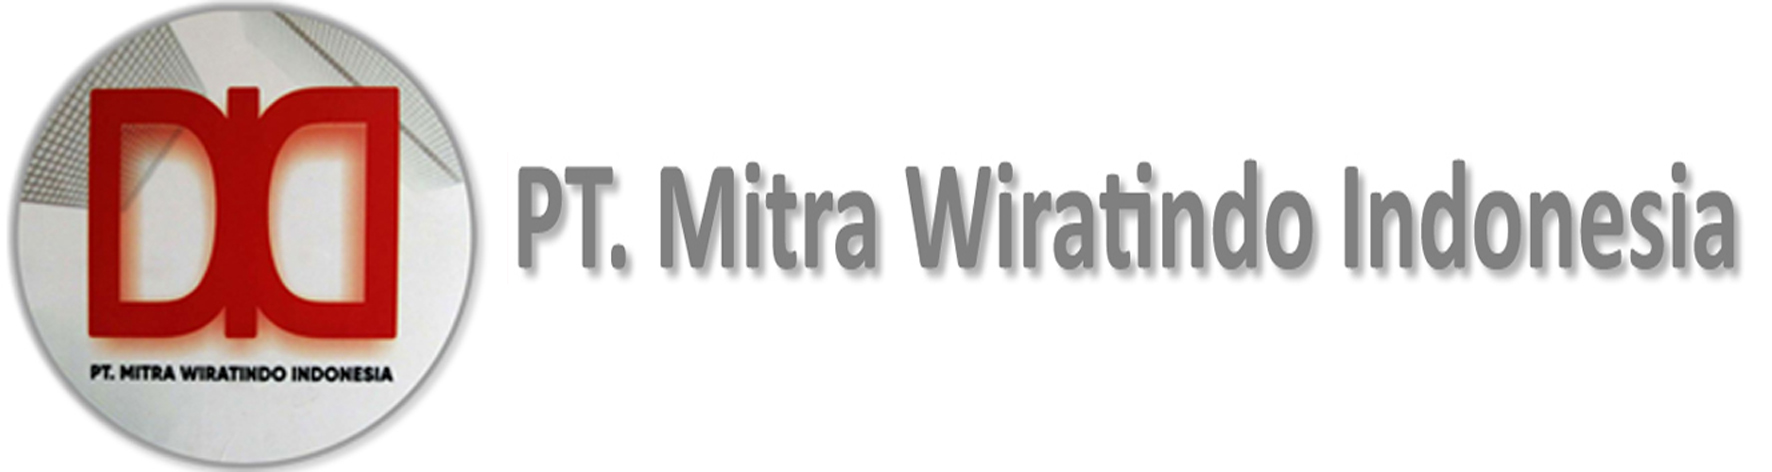 PT. Mitra Wiratindo Indonesia